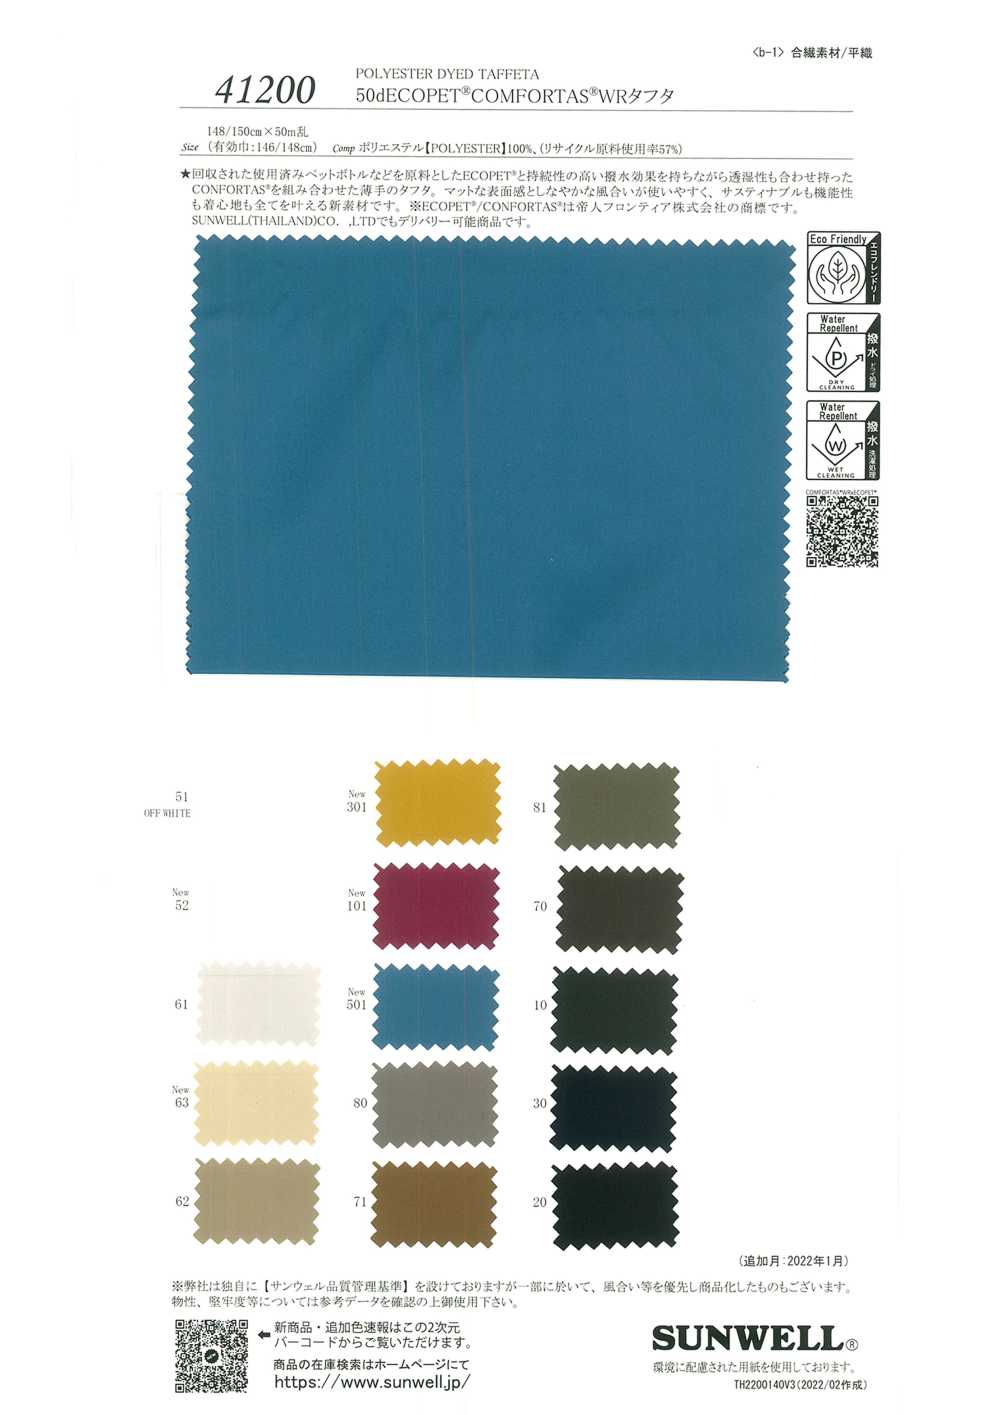 41200 50d ECOPET® COMFORTAS® WR Taft[Textilgewebe] SUNWELL